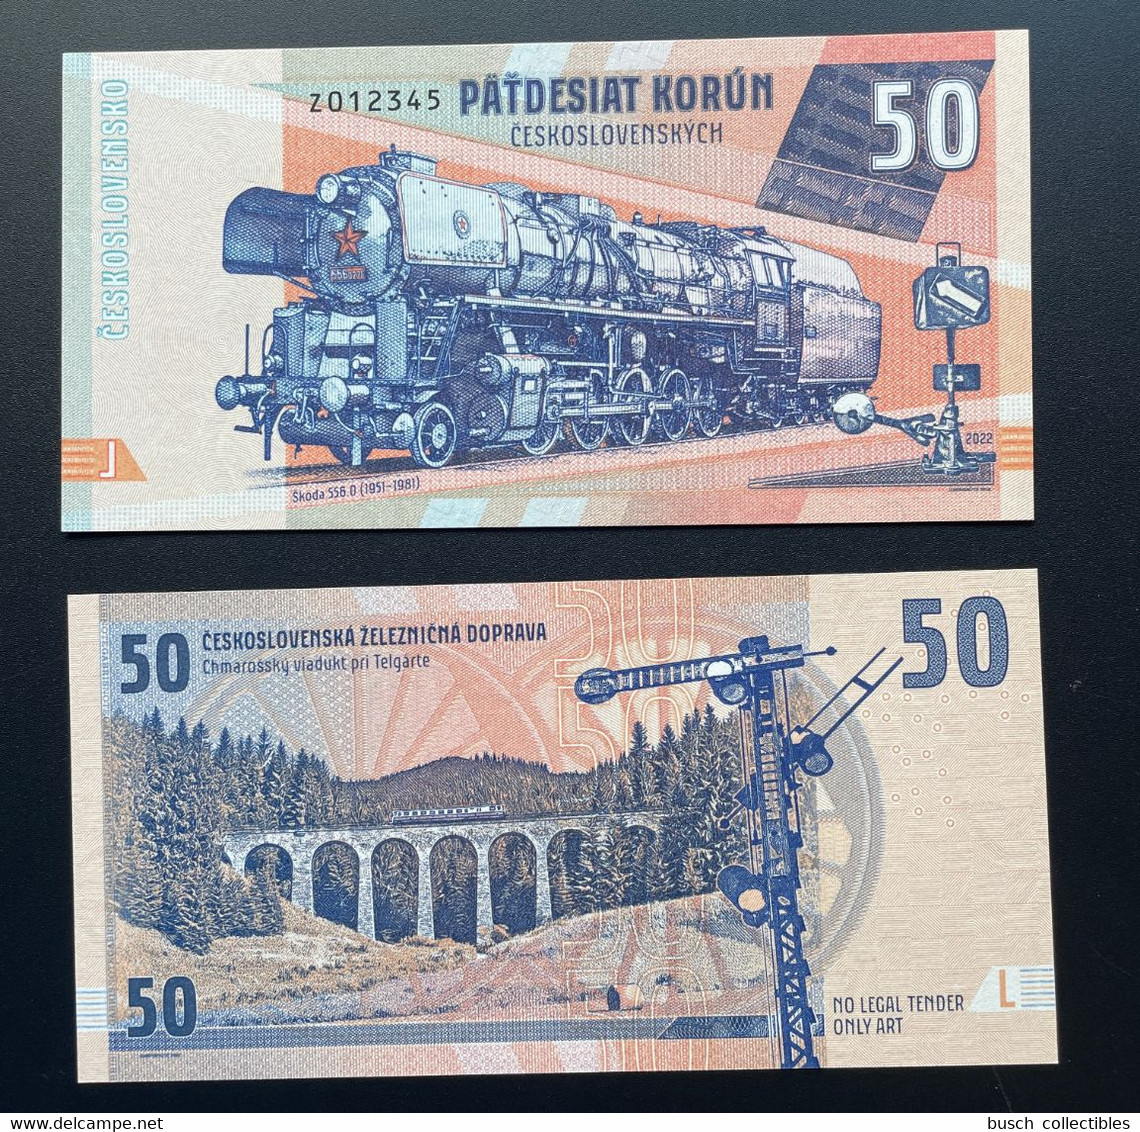 2021 Matej Gabris 50 Korun Czechoslovakia Skoda 556 Train Railways Eisenbahn Locomotive 012345 UNC SPECIMEN ESSAY - Specimen